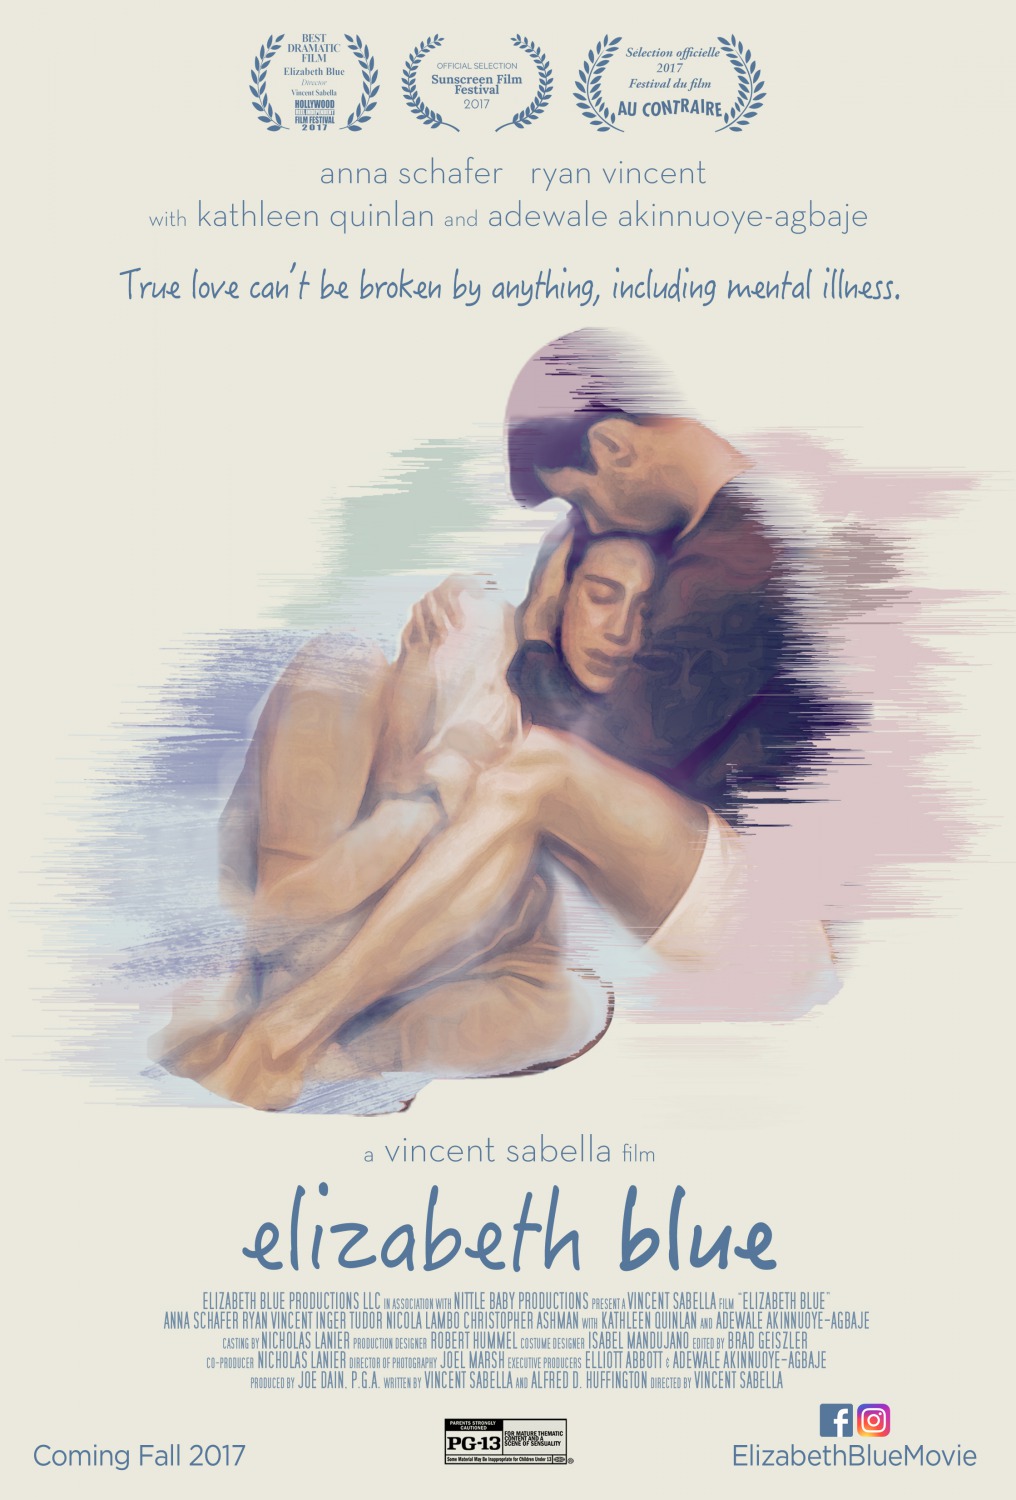 Extra Large Movie Poster Image for Elizabeth Blue 